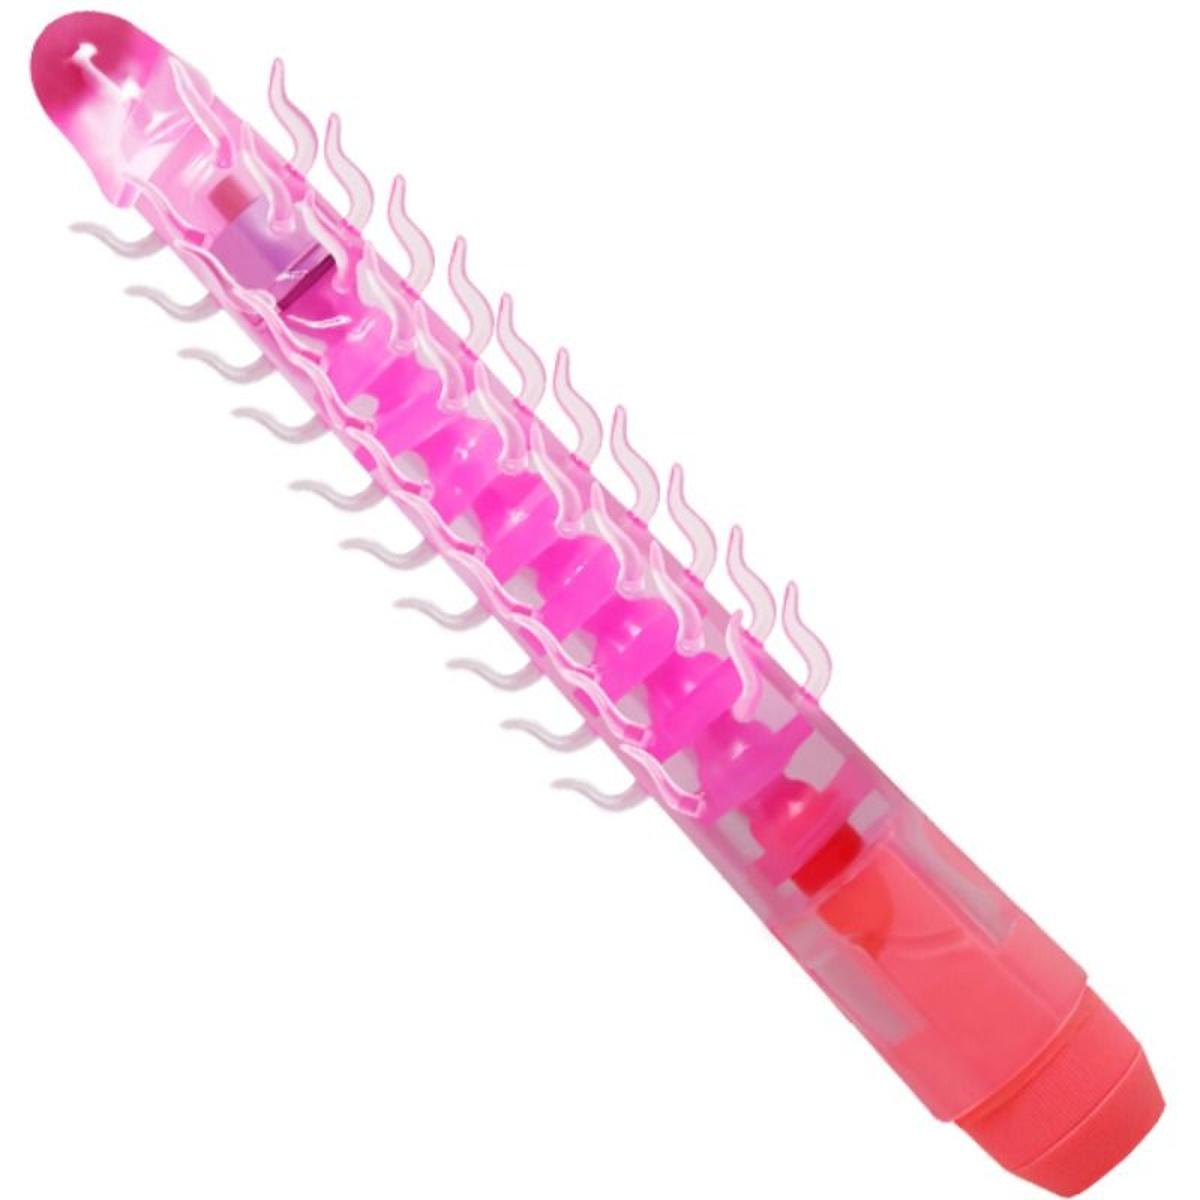 Vibrator “Flexi Vibe: Sensual Spine - Bendable Vibrating Dildo” - OH MY! FANTASY